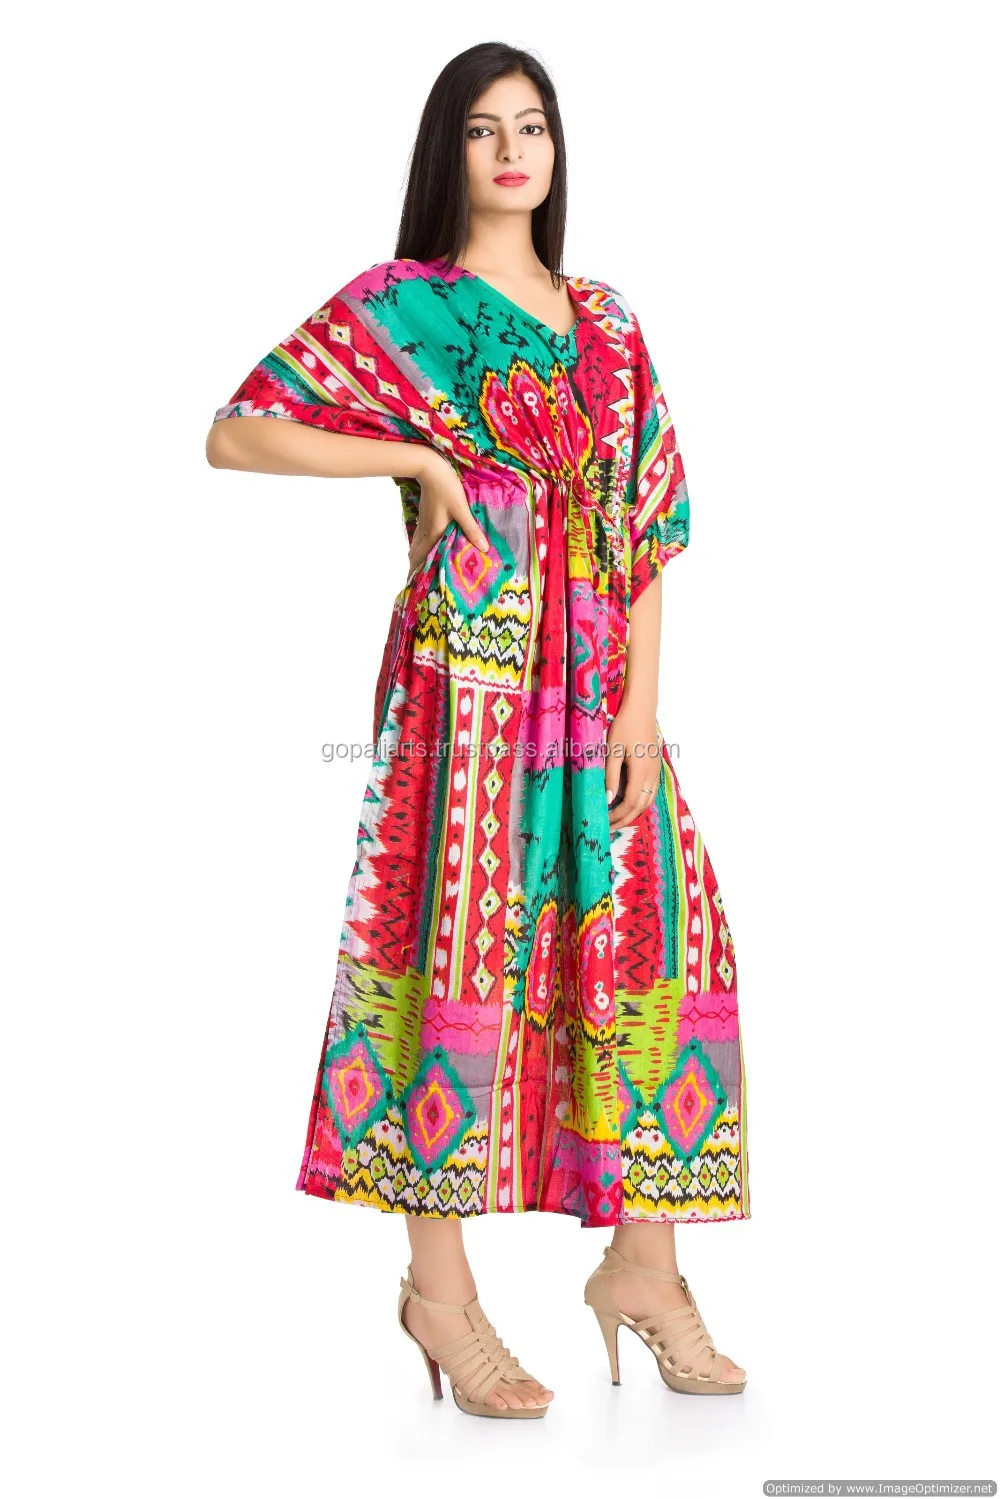 Resort Wear Beach Cover up Spa Robe Women Caftan Plus Size Kaftan Vintage Silk Kimono Long India Dress Bohemian Dress Indian Maxi